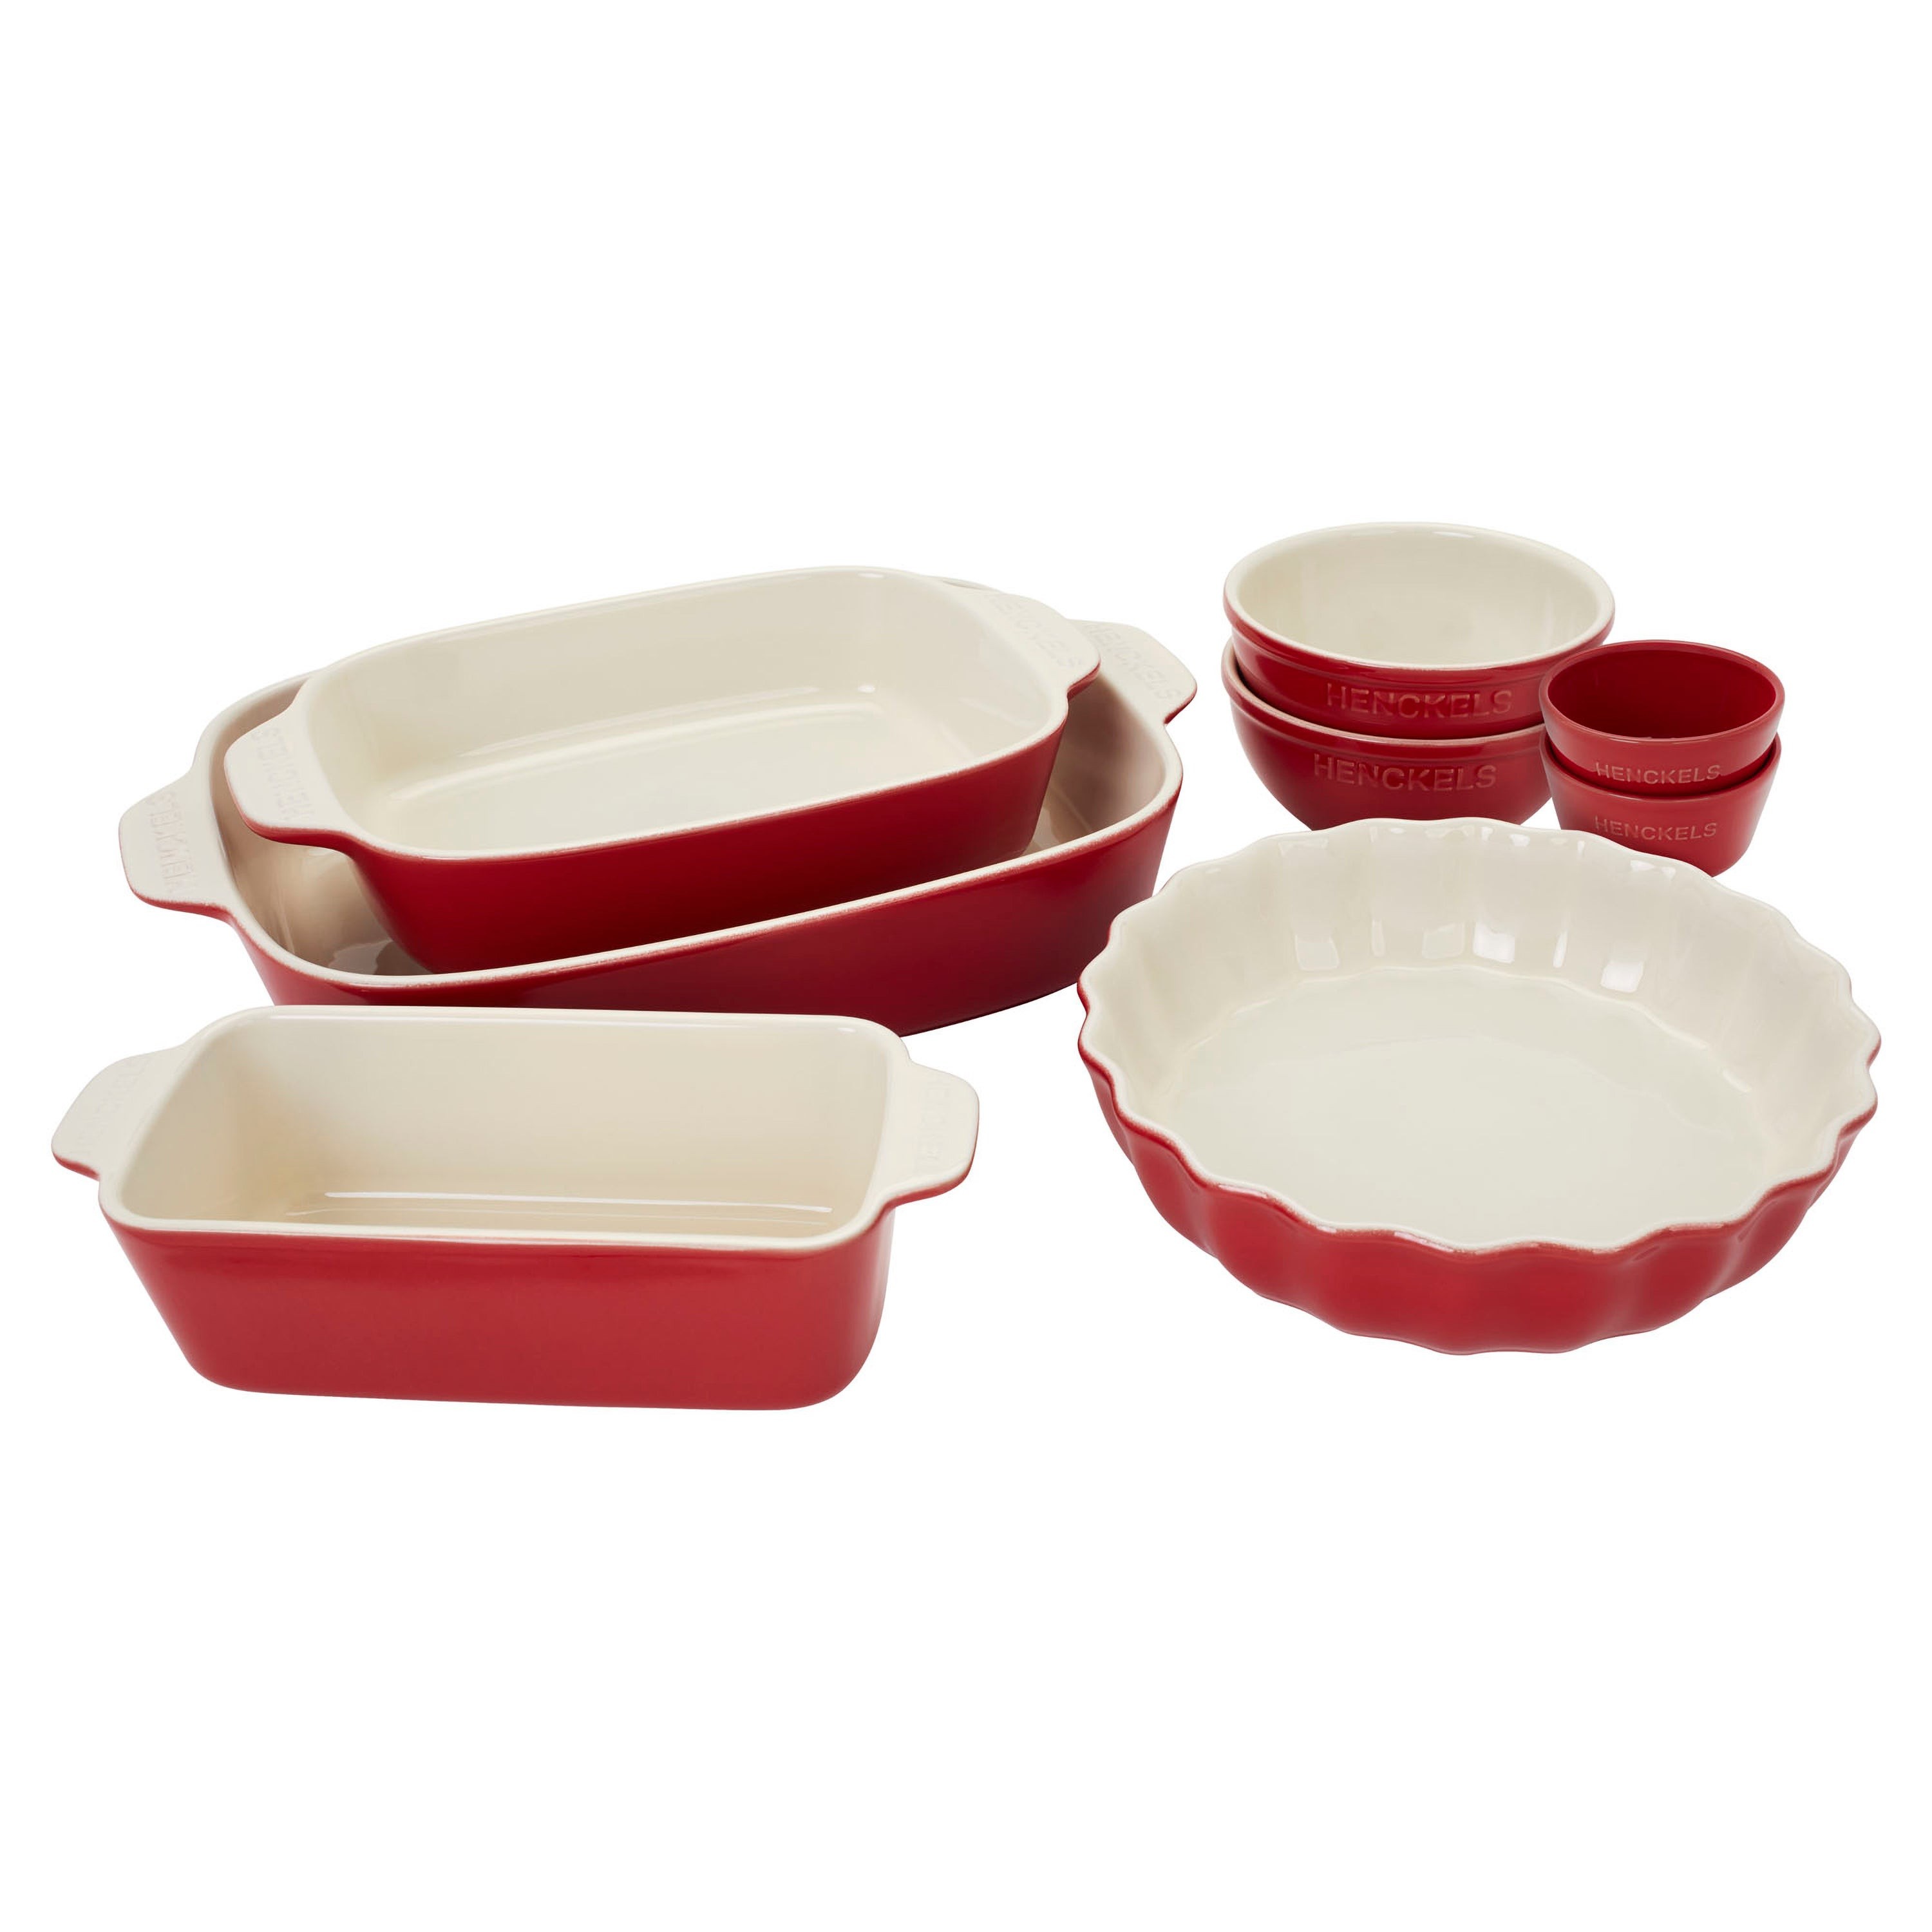 8pc Ceramic Bakeware & Serving Set Cherry Red